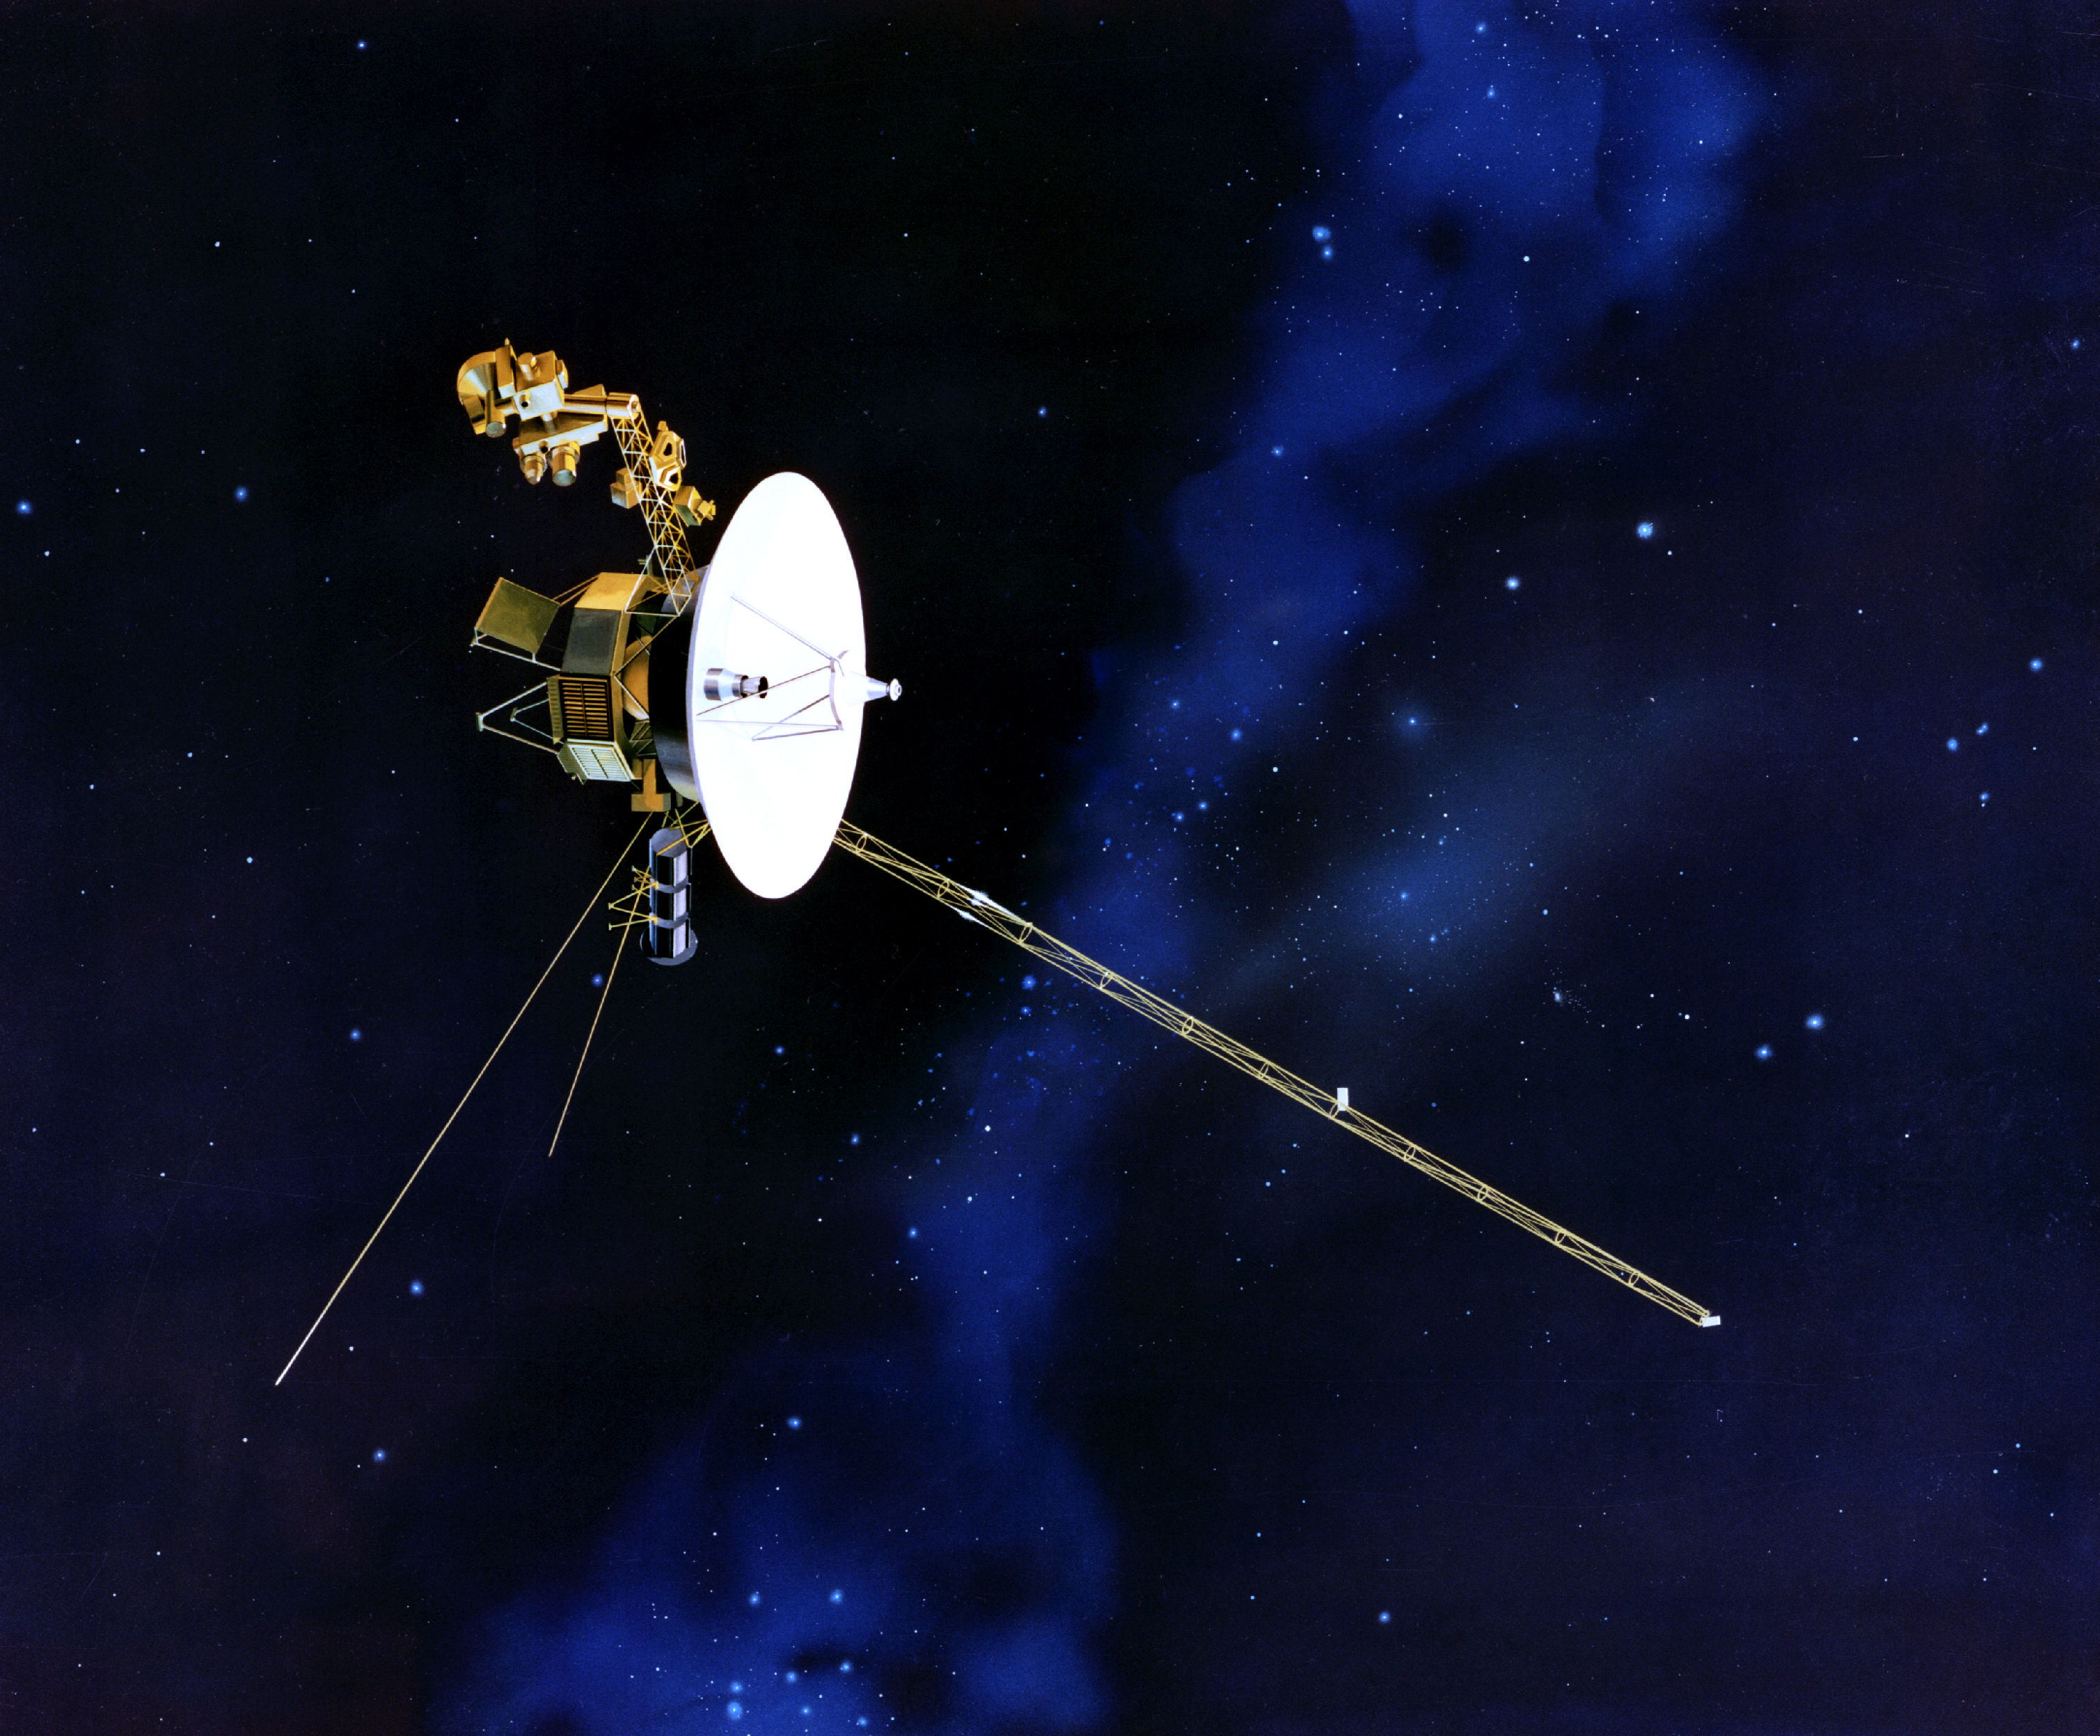 1977 Voyager #1